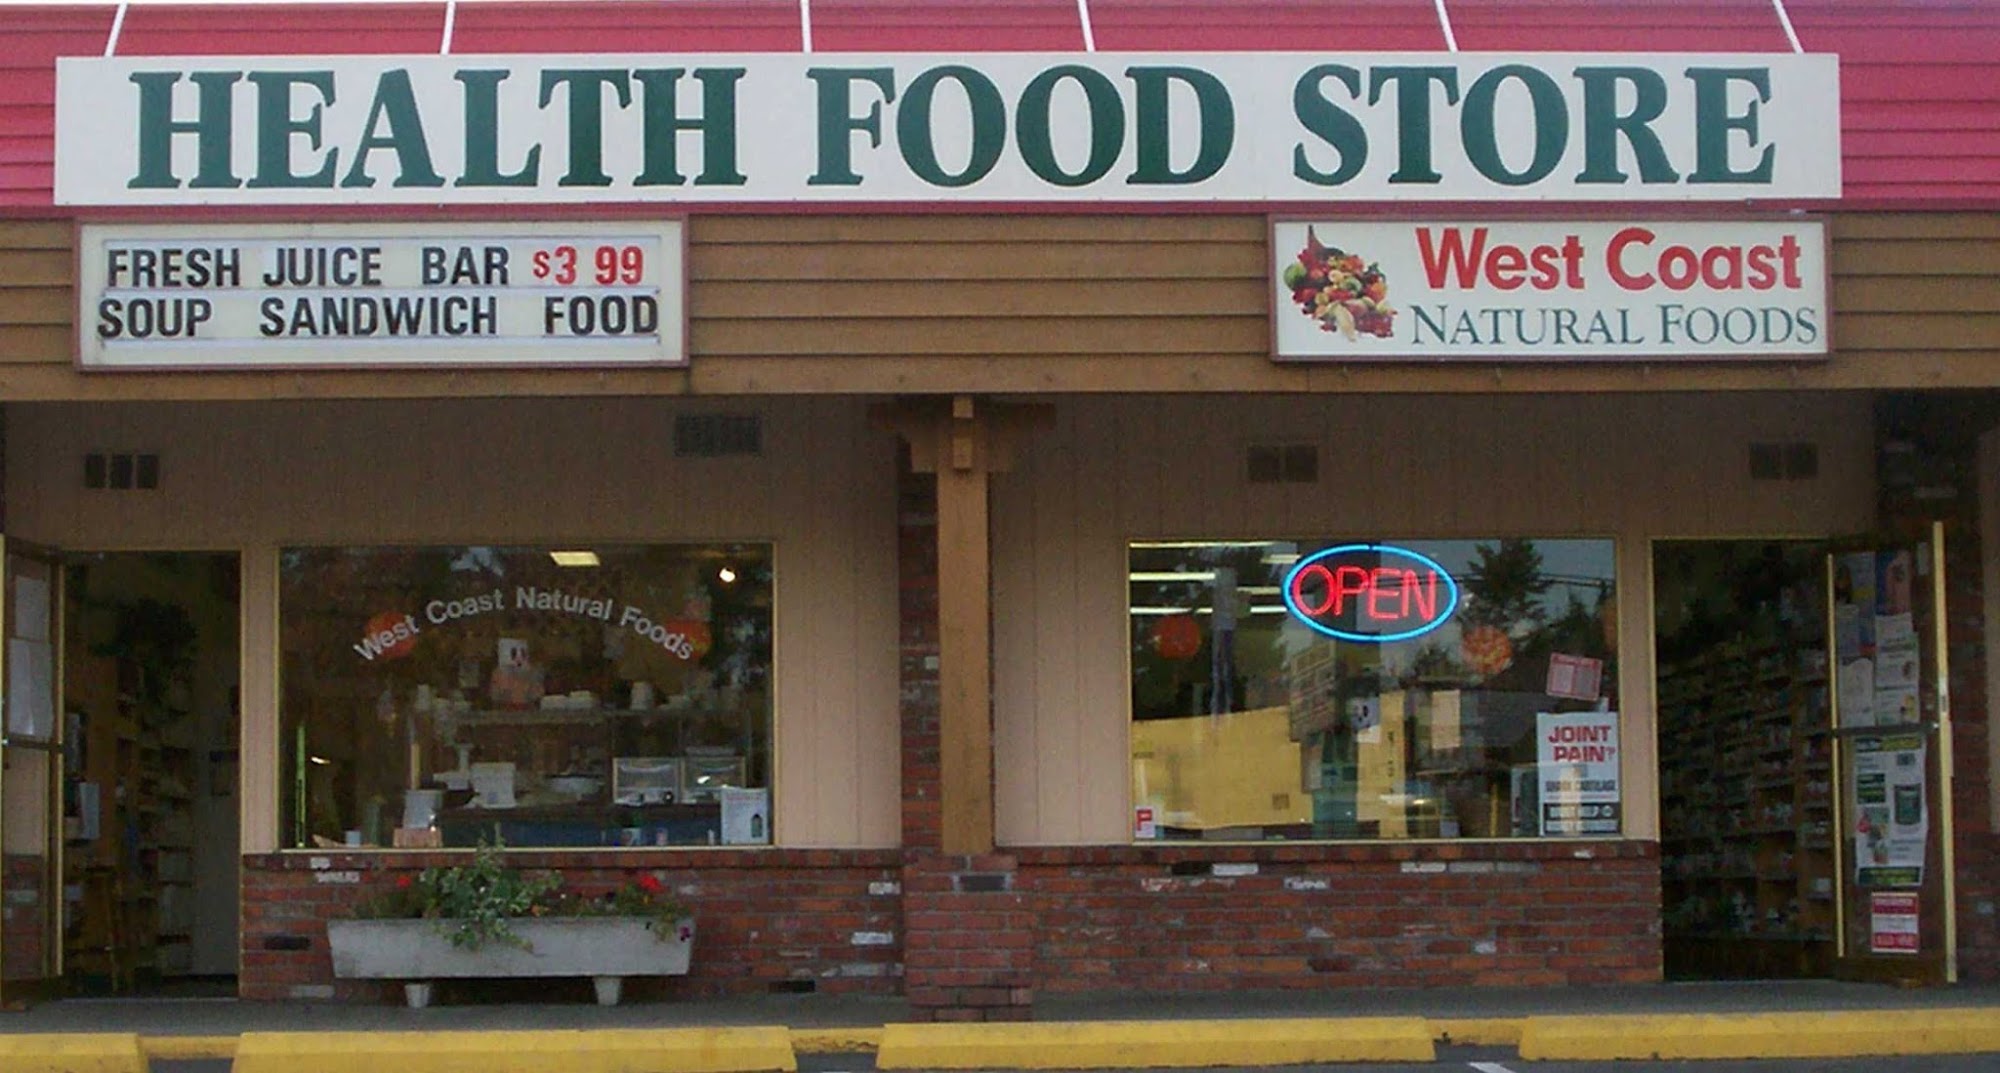 West Coast Natural Foods